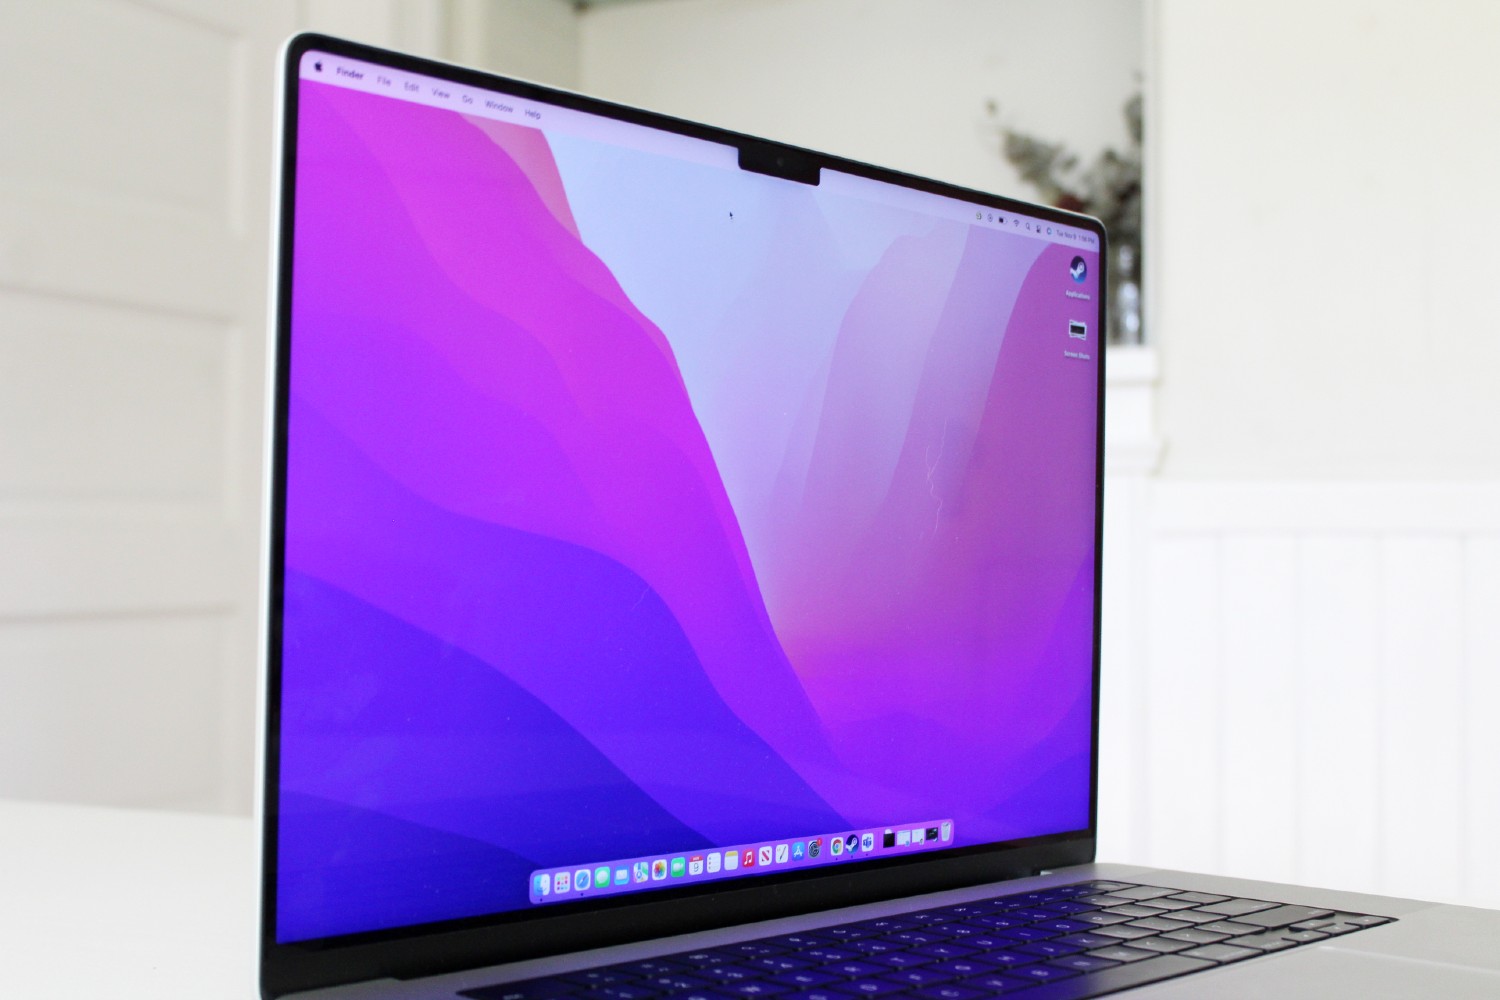 Vista lateral do Apple MacBook Pro mostrando a tela.